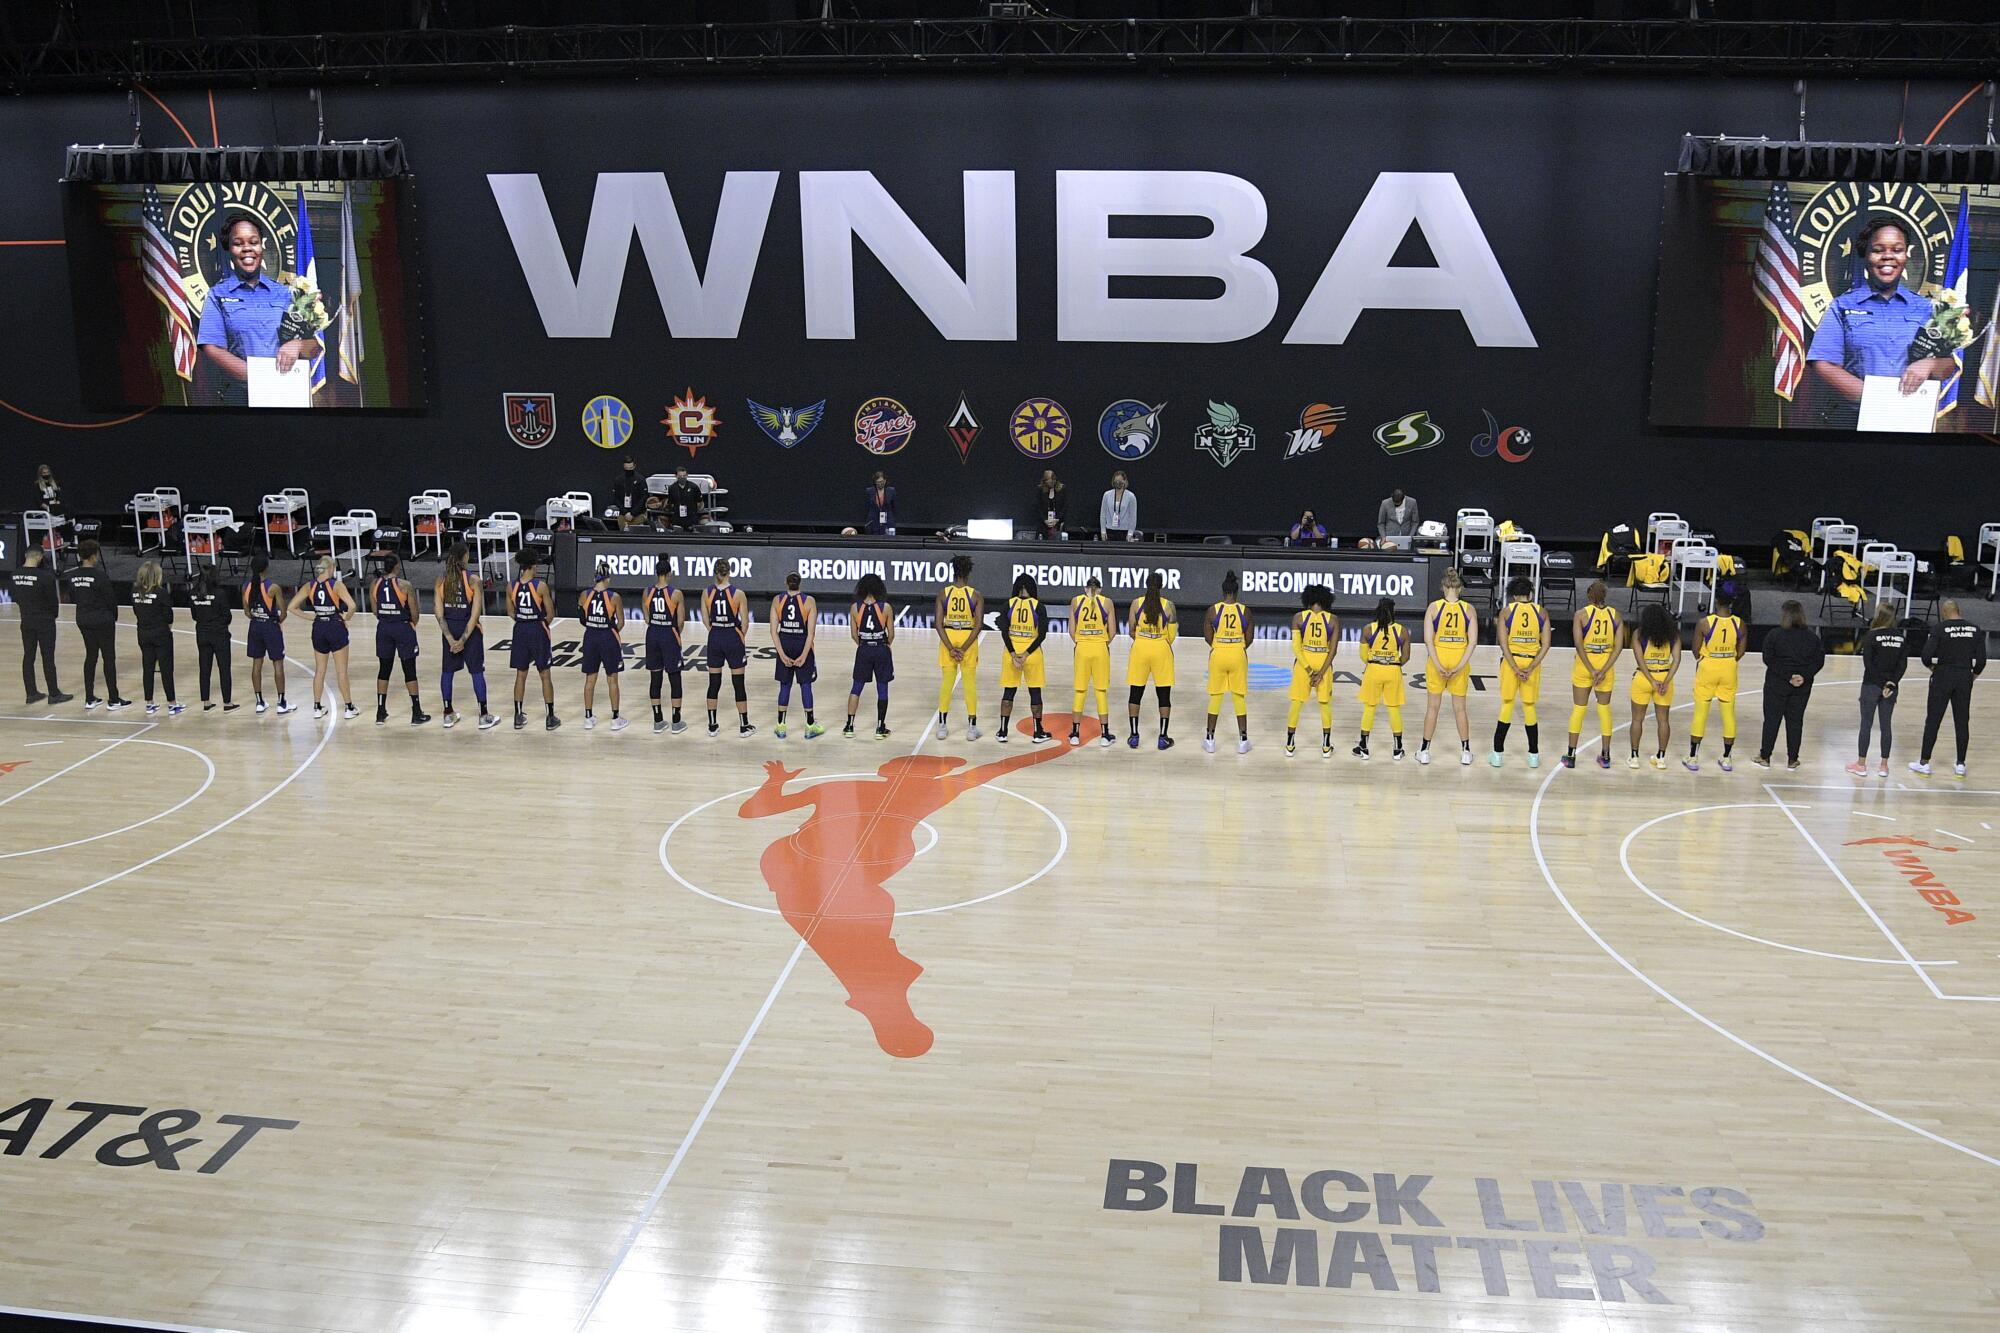 WNBA was clear leader in effecting social change in 2020 - Los